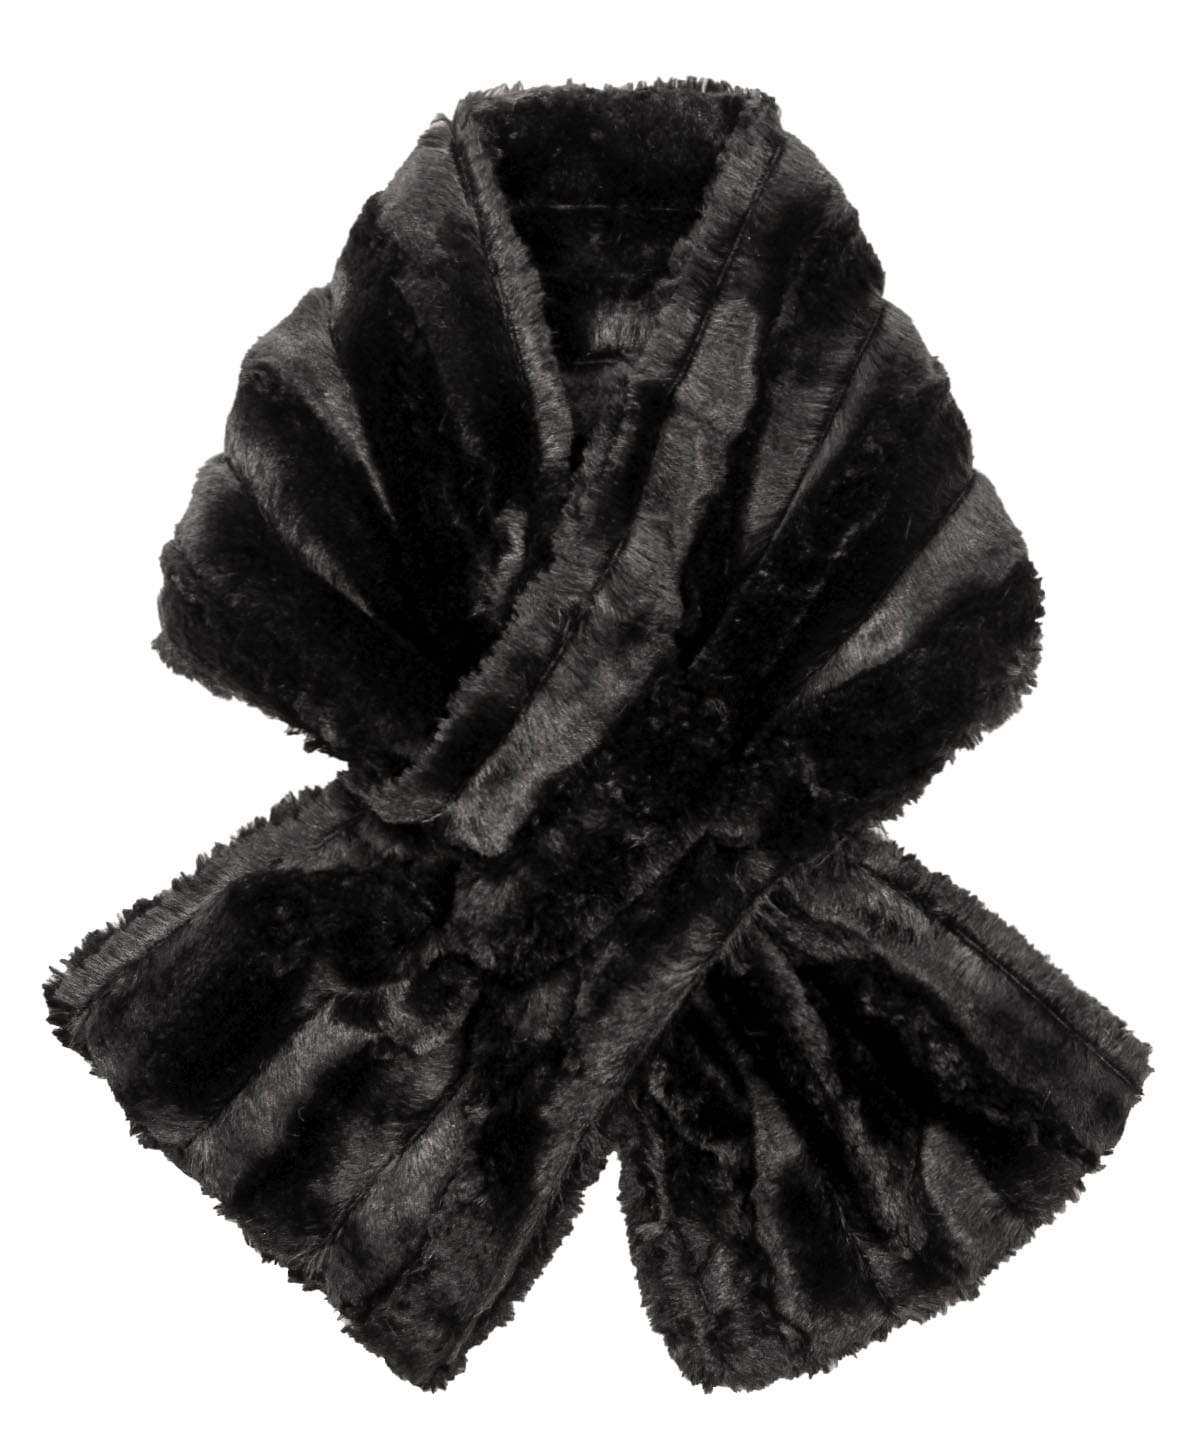 Pull-Thru Scarf - Minky Faux Fur in Black